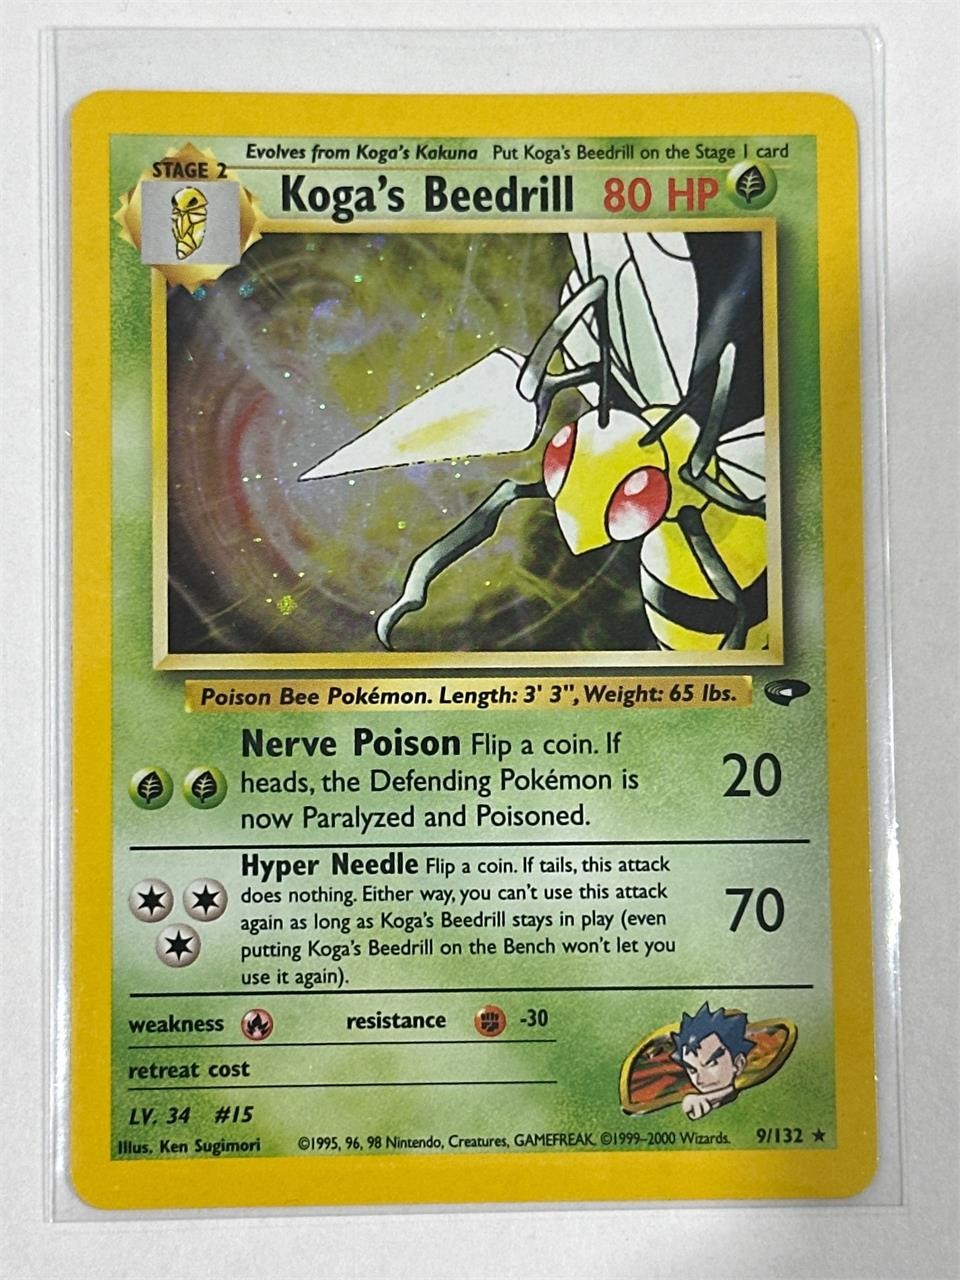 Koga’s Beedrill Pokémon Holo Card